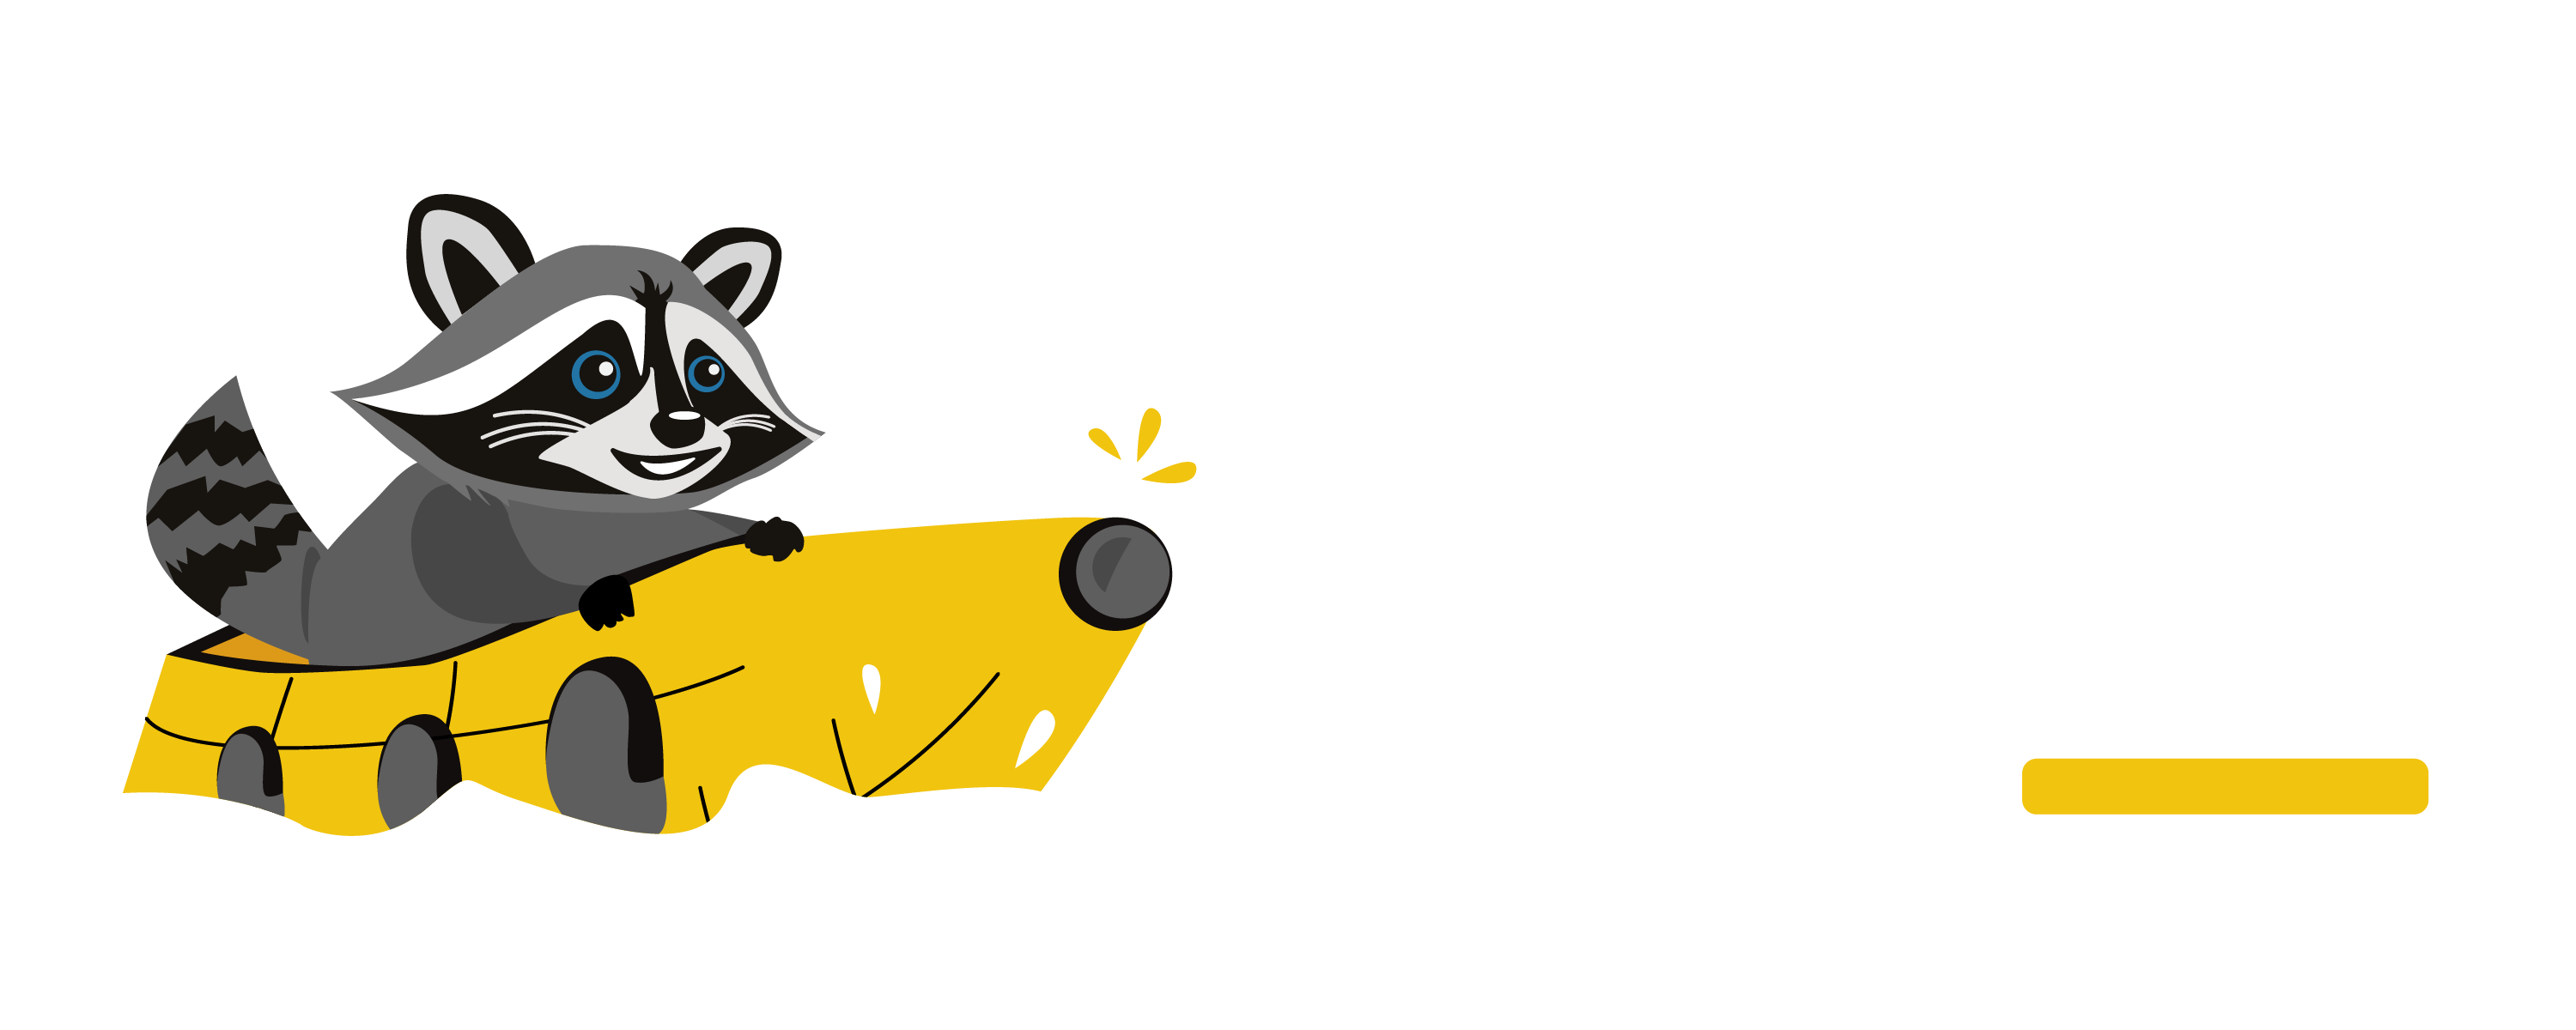 Mcnameface Logo